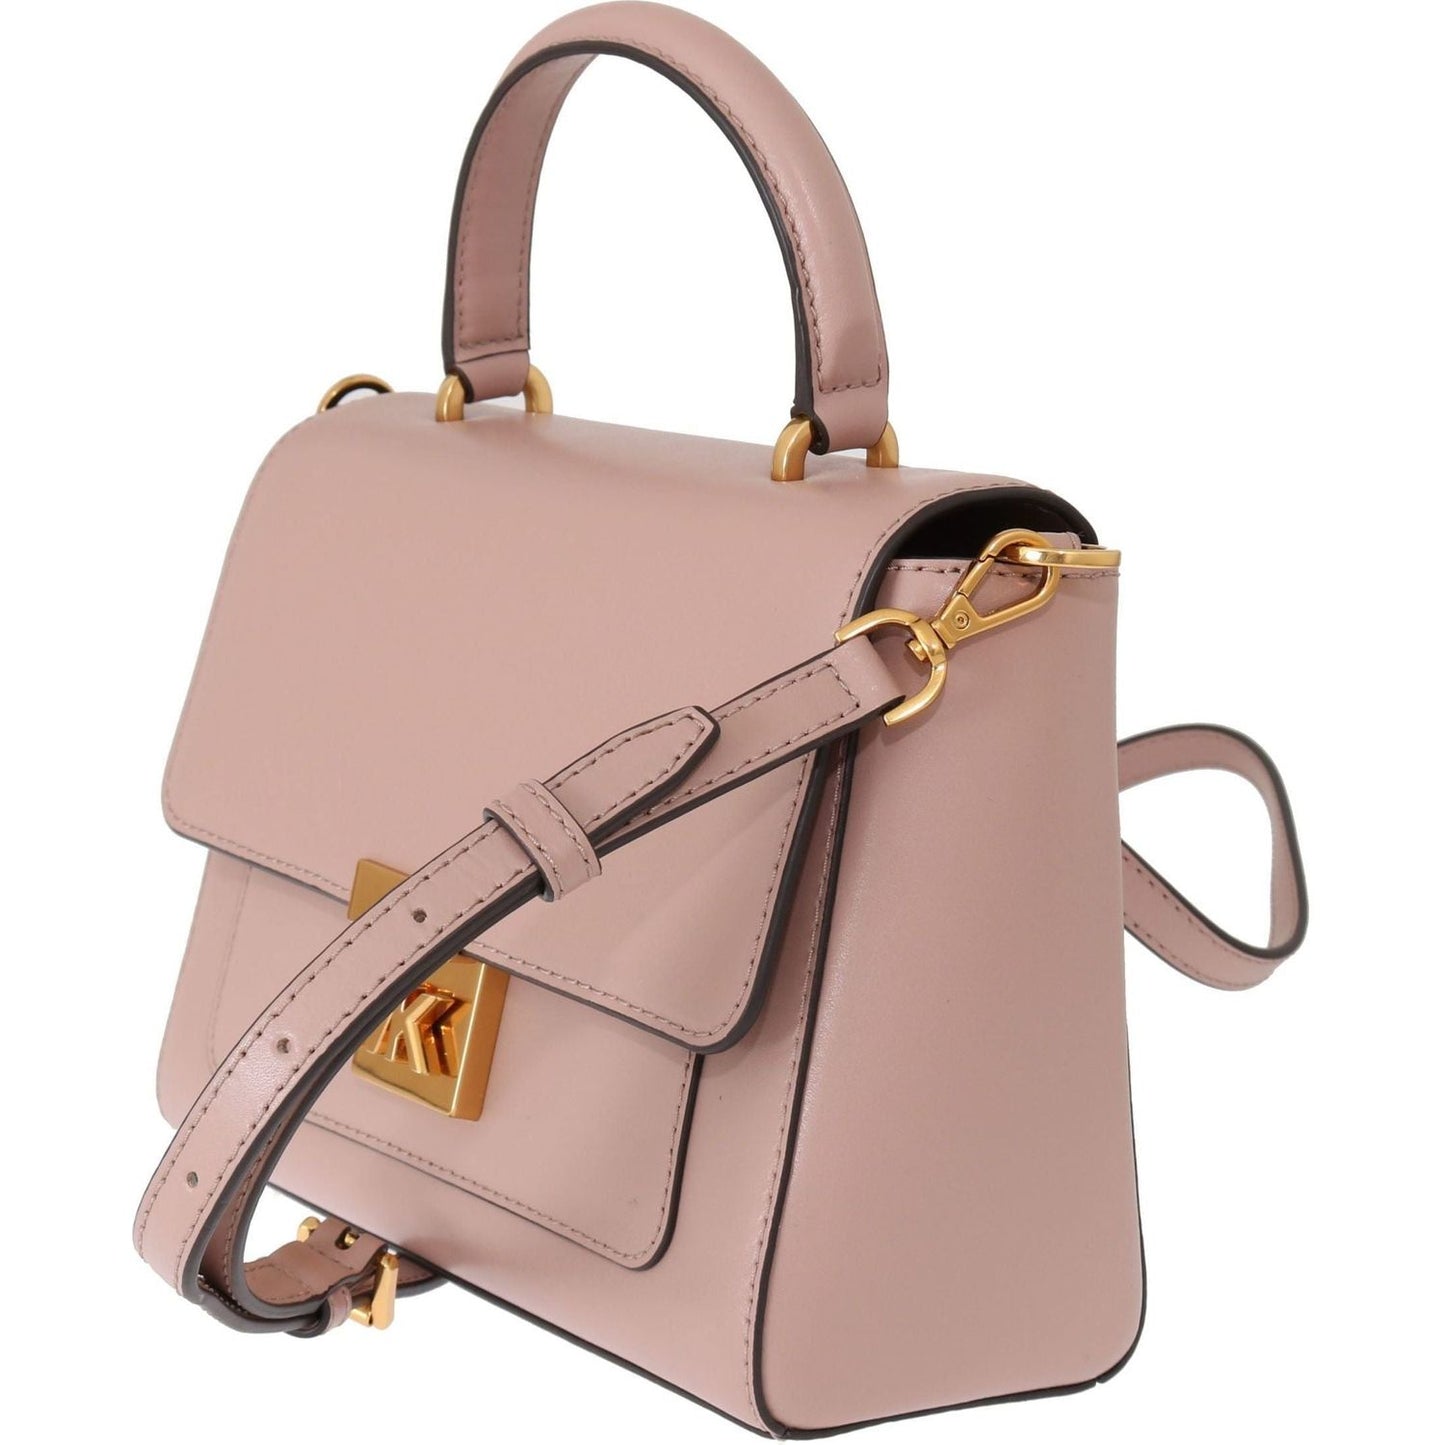 Michael Kors Elegant Pink Leather Mindy Shoulder Bag pink-mindy-leather-shoulder-bag WOMAN HANDBAG IMG_8913-scaled-7a604344-753.jpg